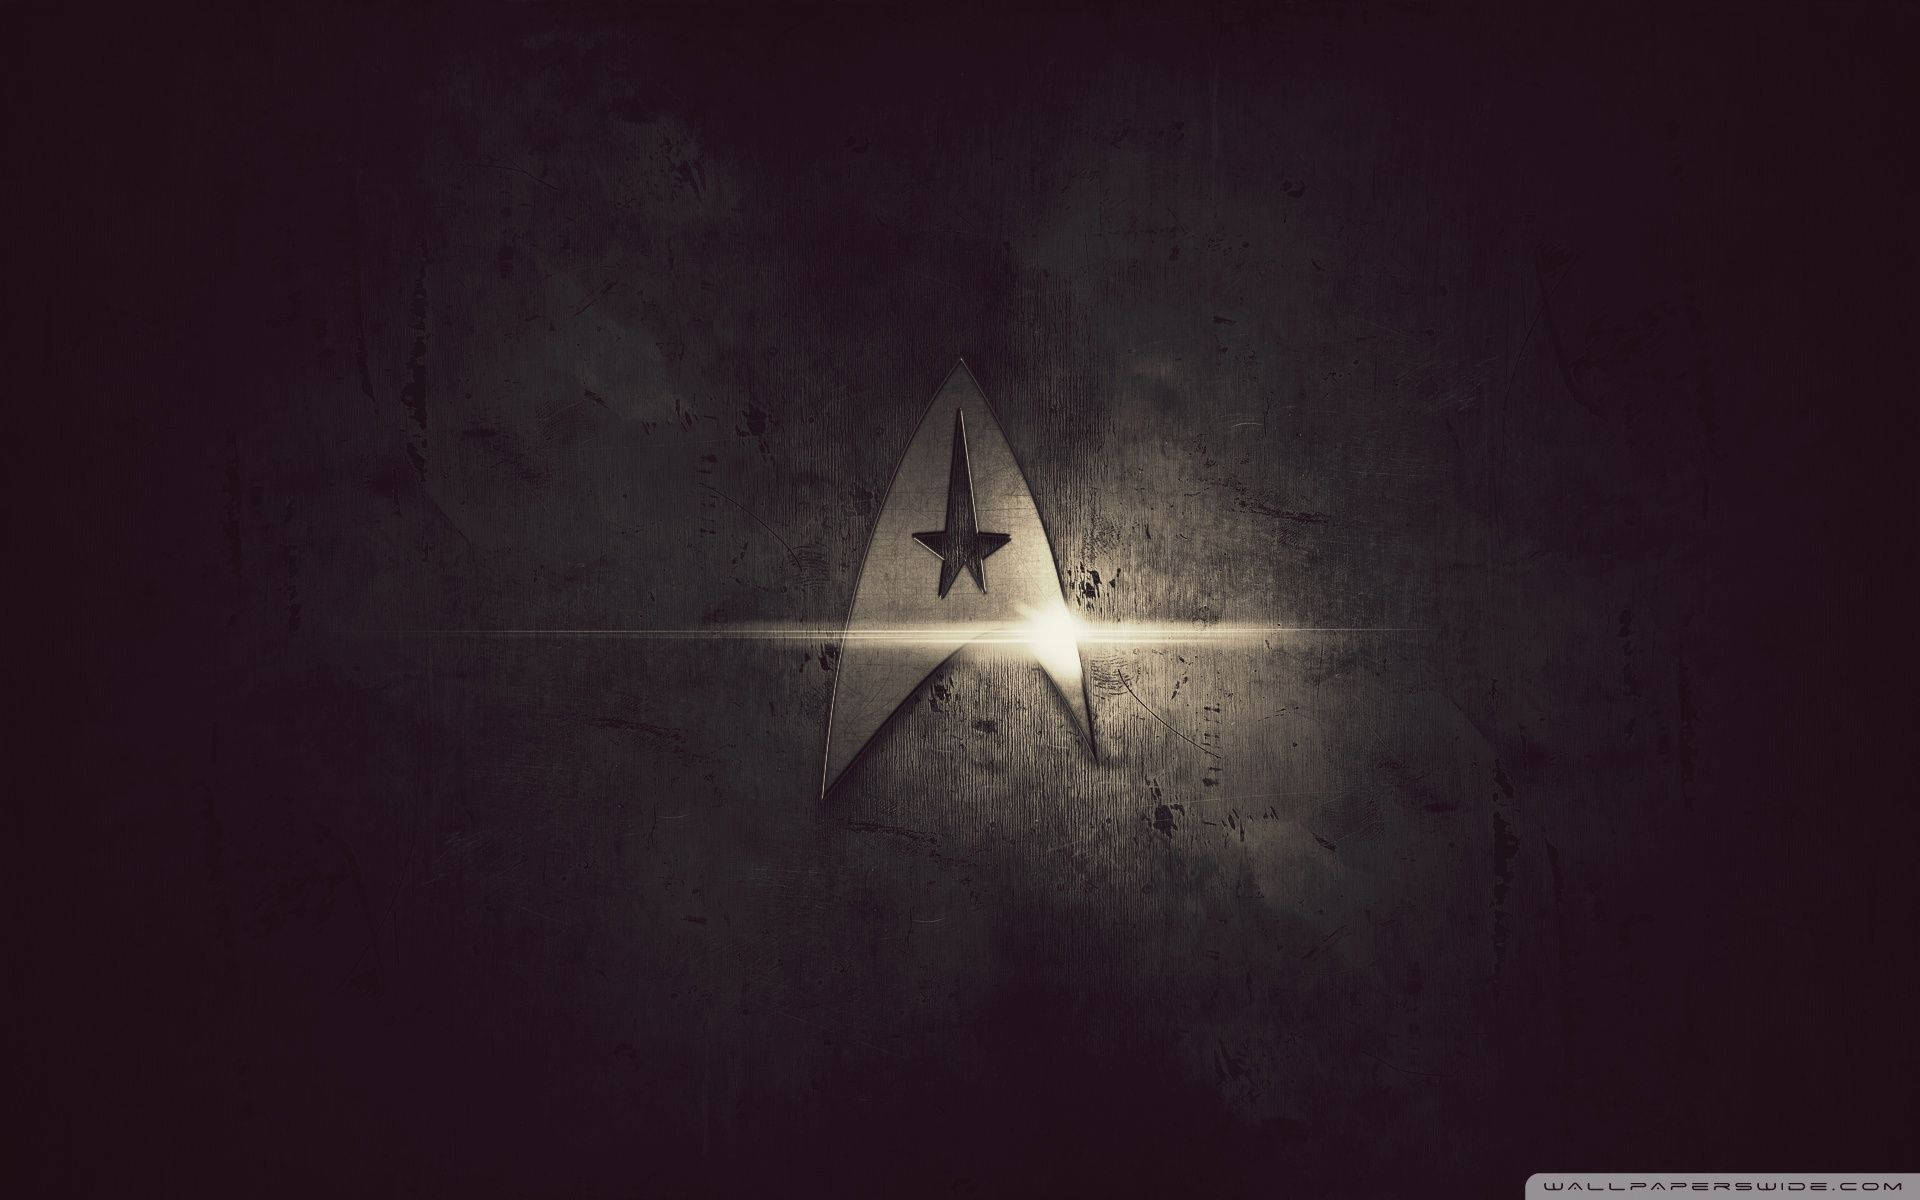 Amazing wallpaper of Star Trek logo with heavy metal style.